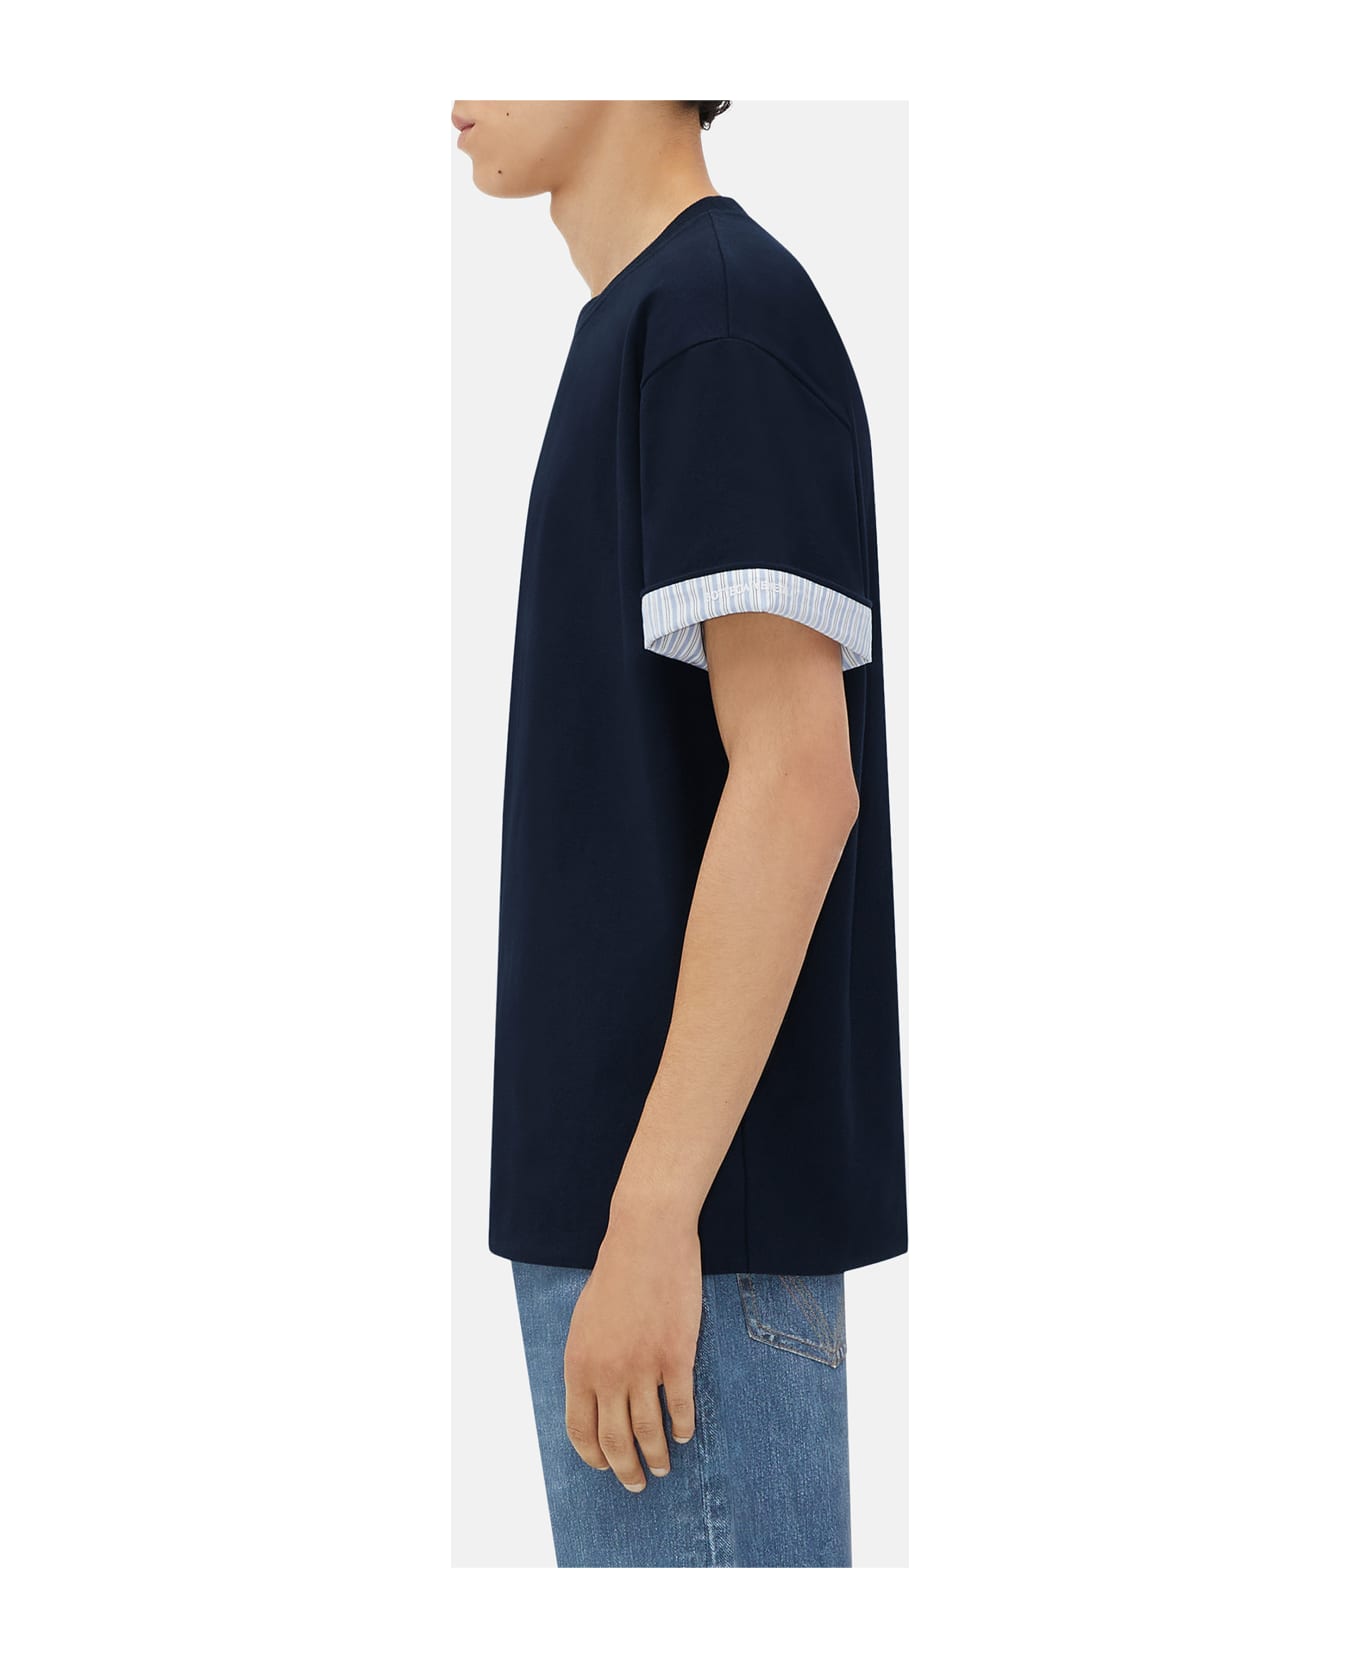 Bottega Veneta T-shirt With Cuff - Blue シャツ